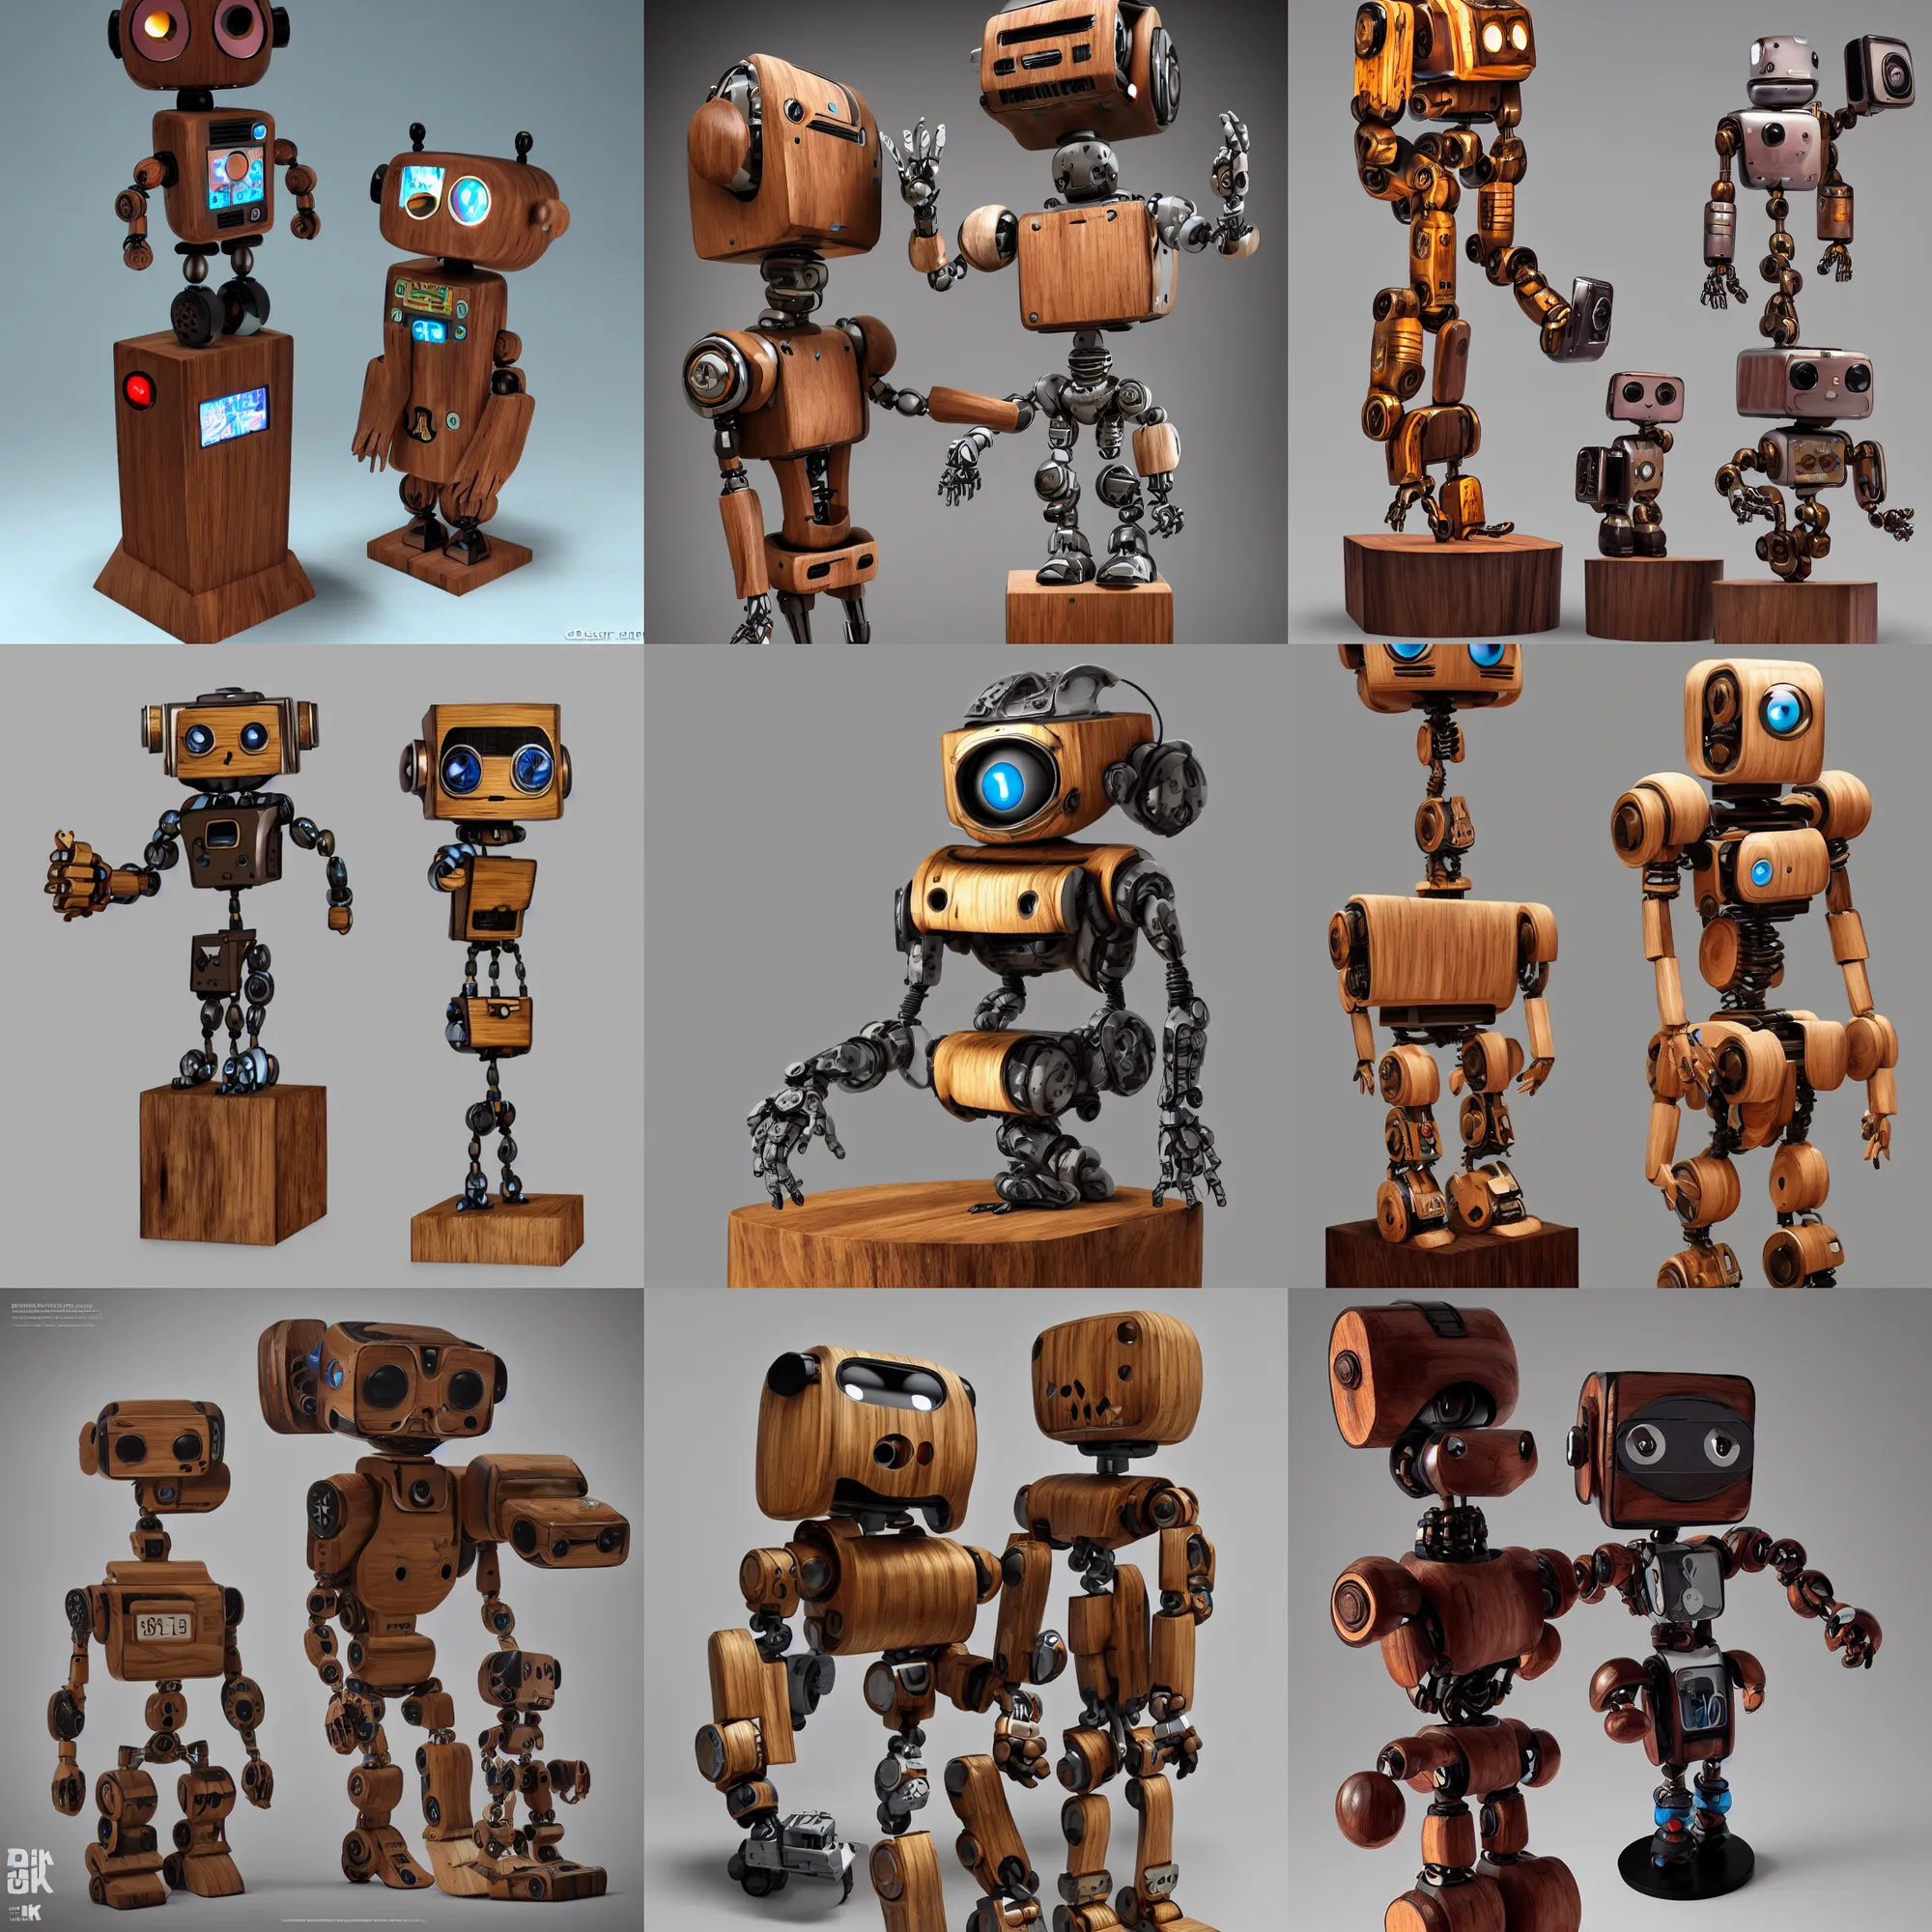 Prompt: 8 k photorealistic, a wooden art toys on a pedestal, cute robot wooden, cyberpunk, concept art, contemporary art gallery, art by dean roger